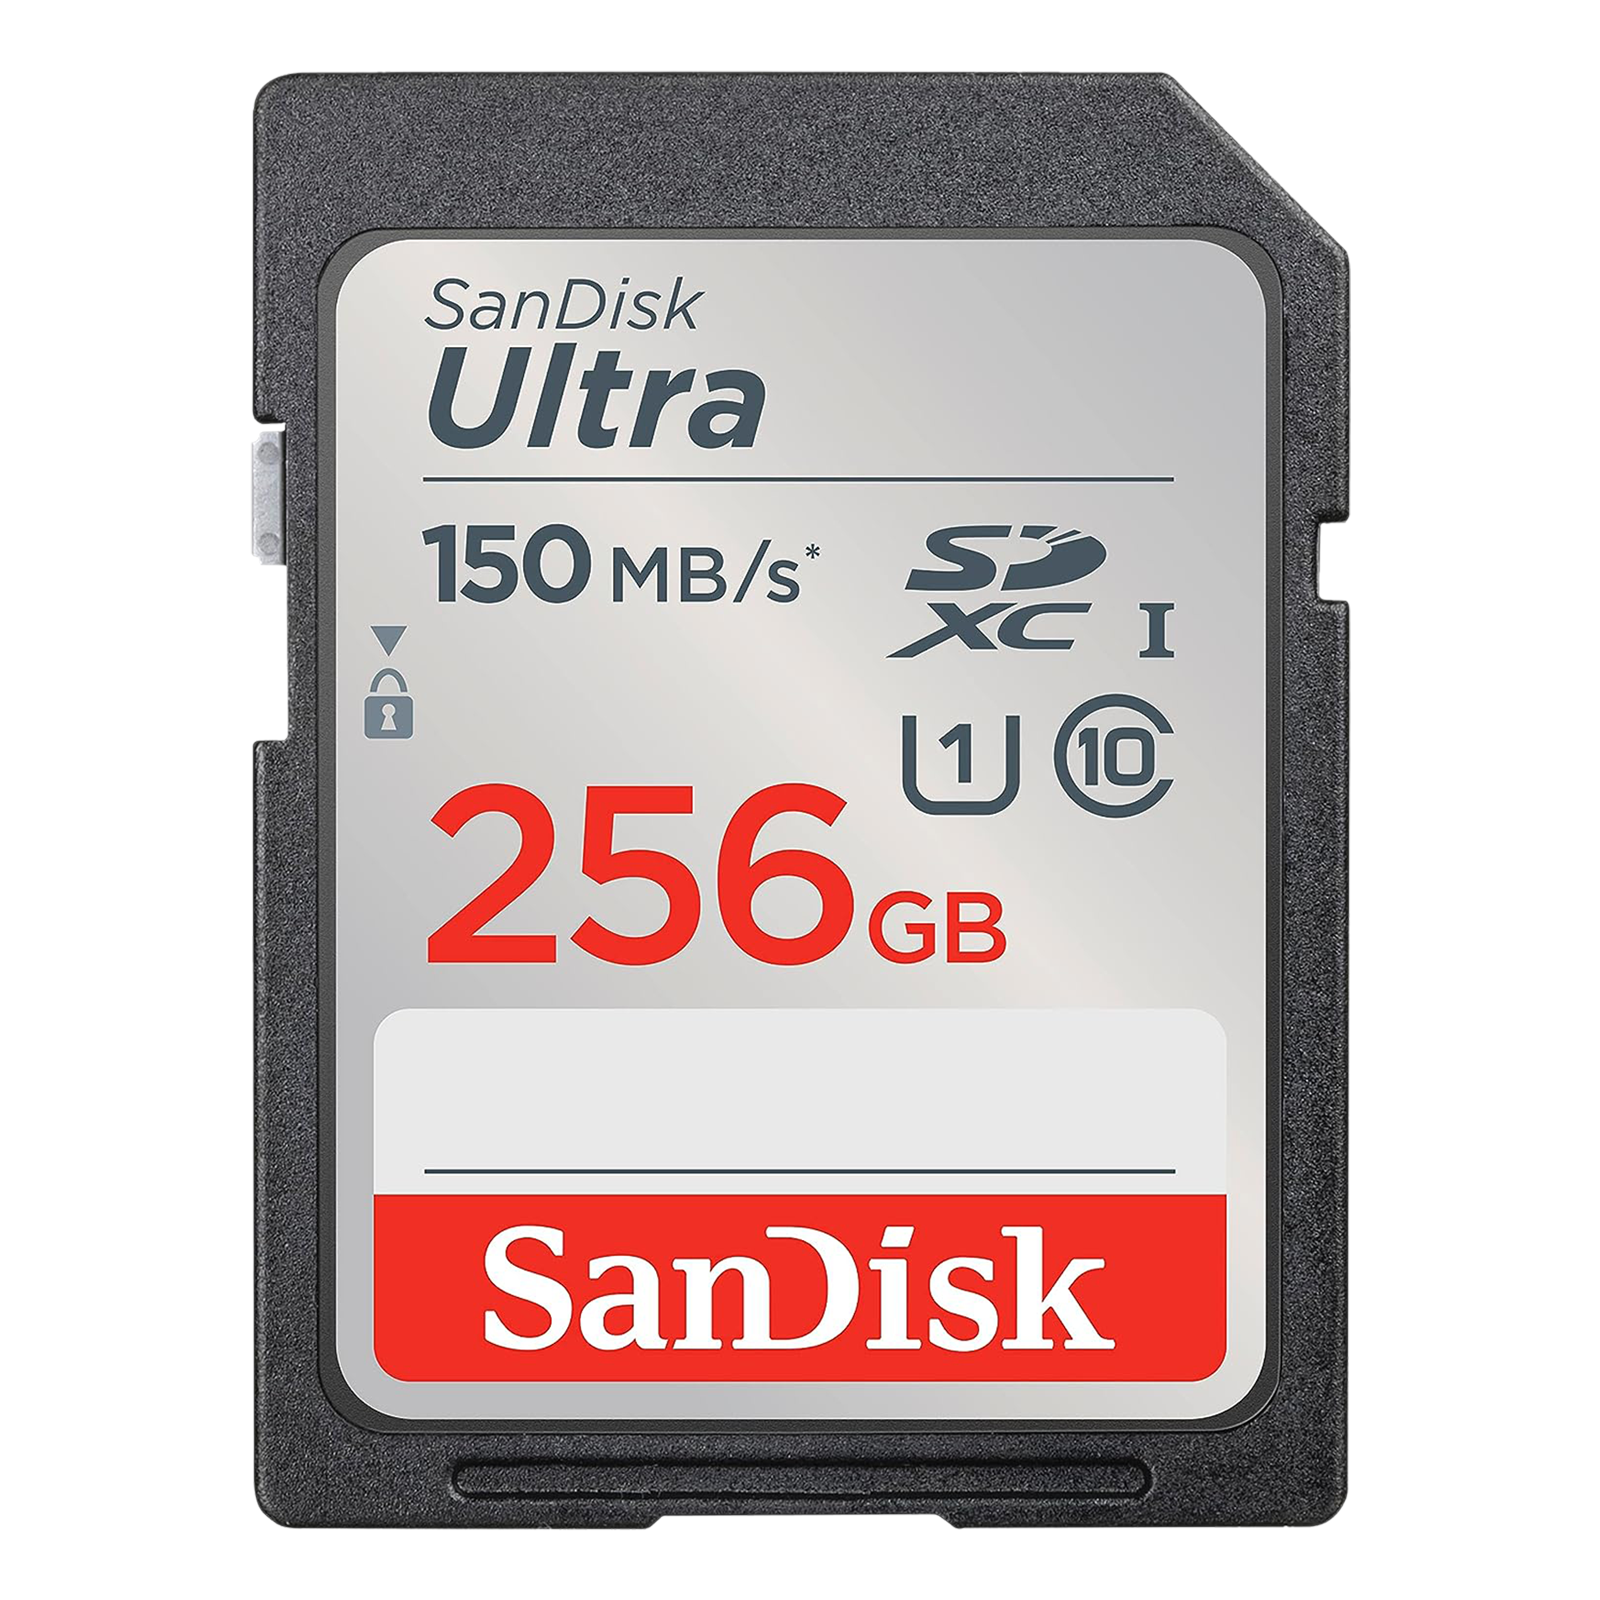 SanDisk Ultra SDXC 256GB Class 10 150MB/s Memory Card